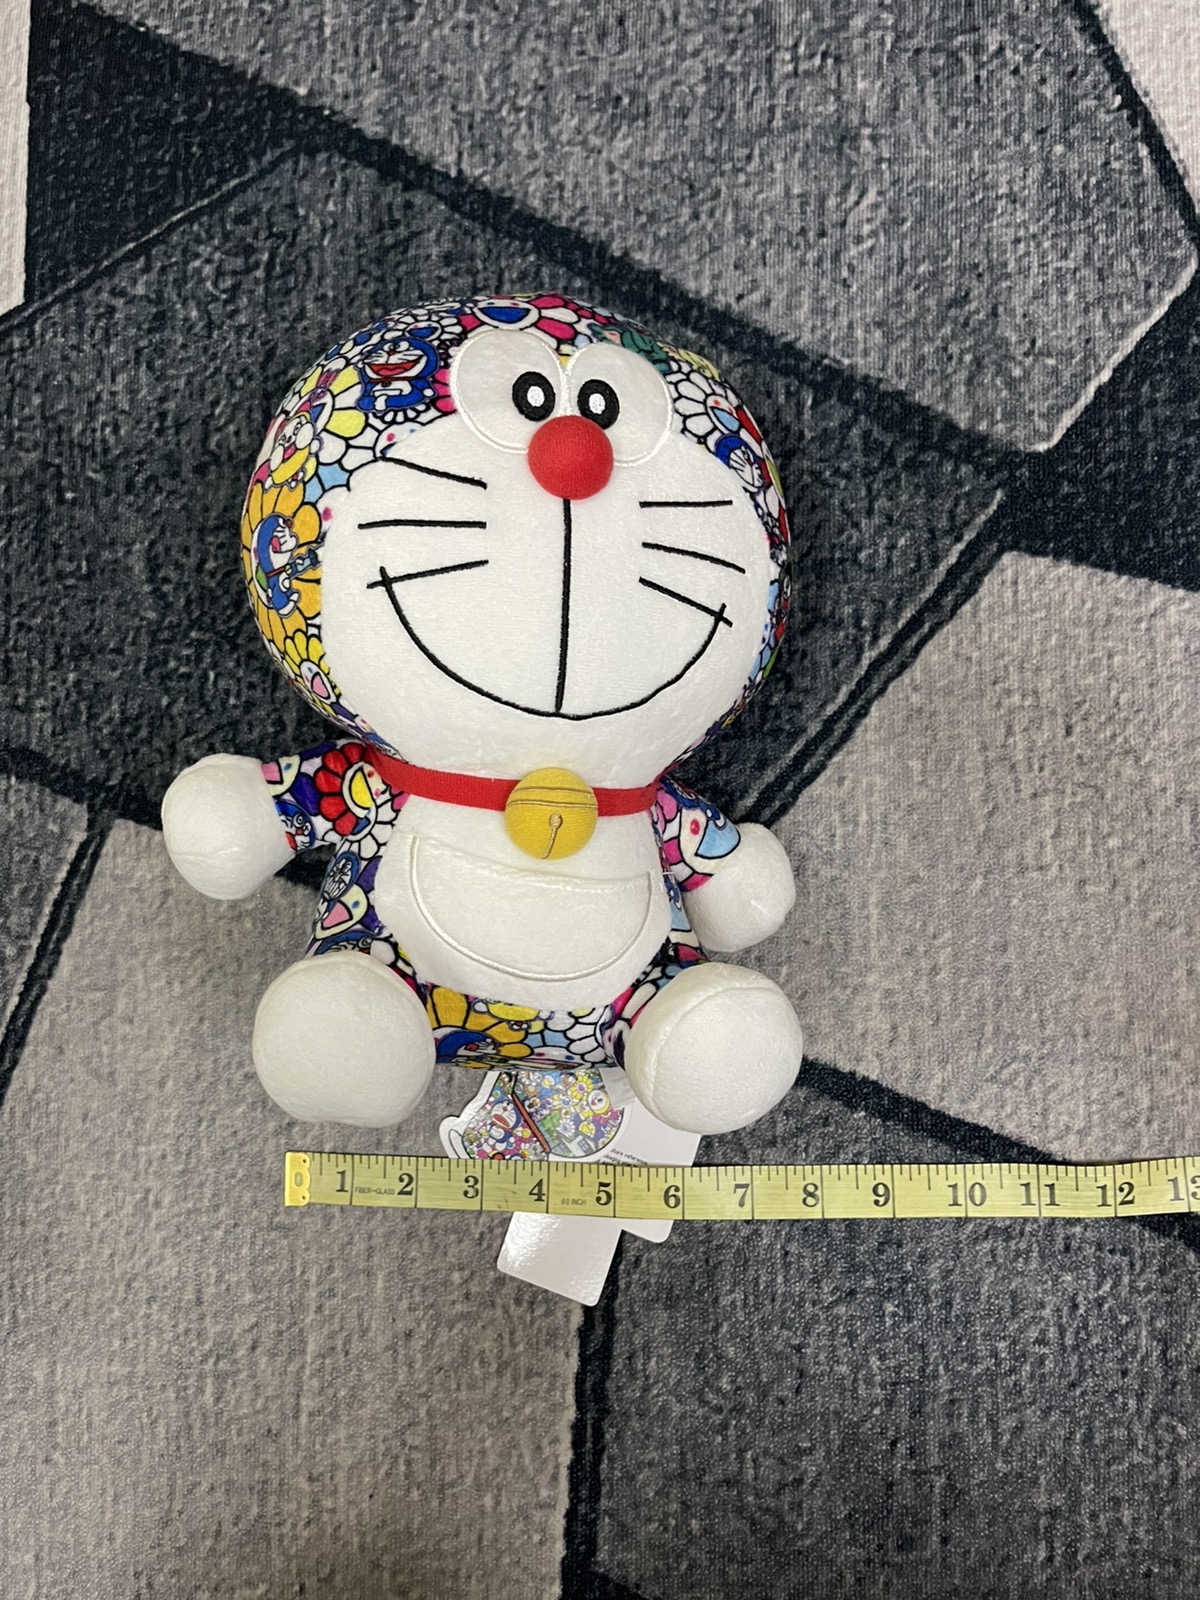 Japanese Brand - New Takashi Murakami Doraemon Toys Limited Edition - 4